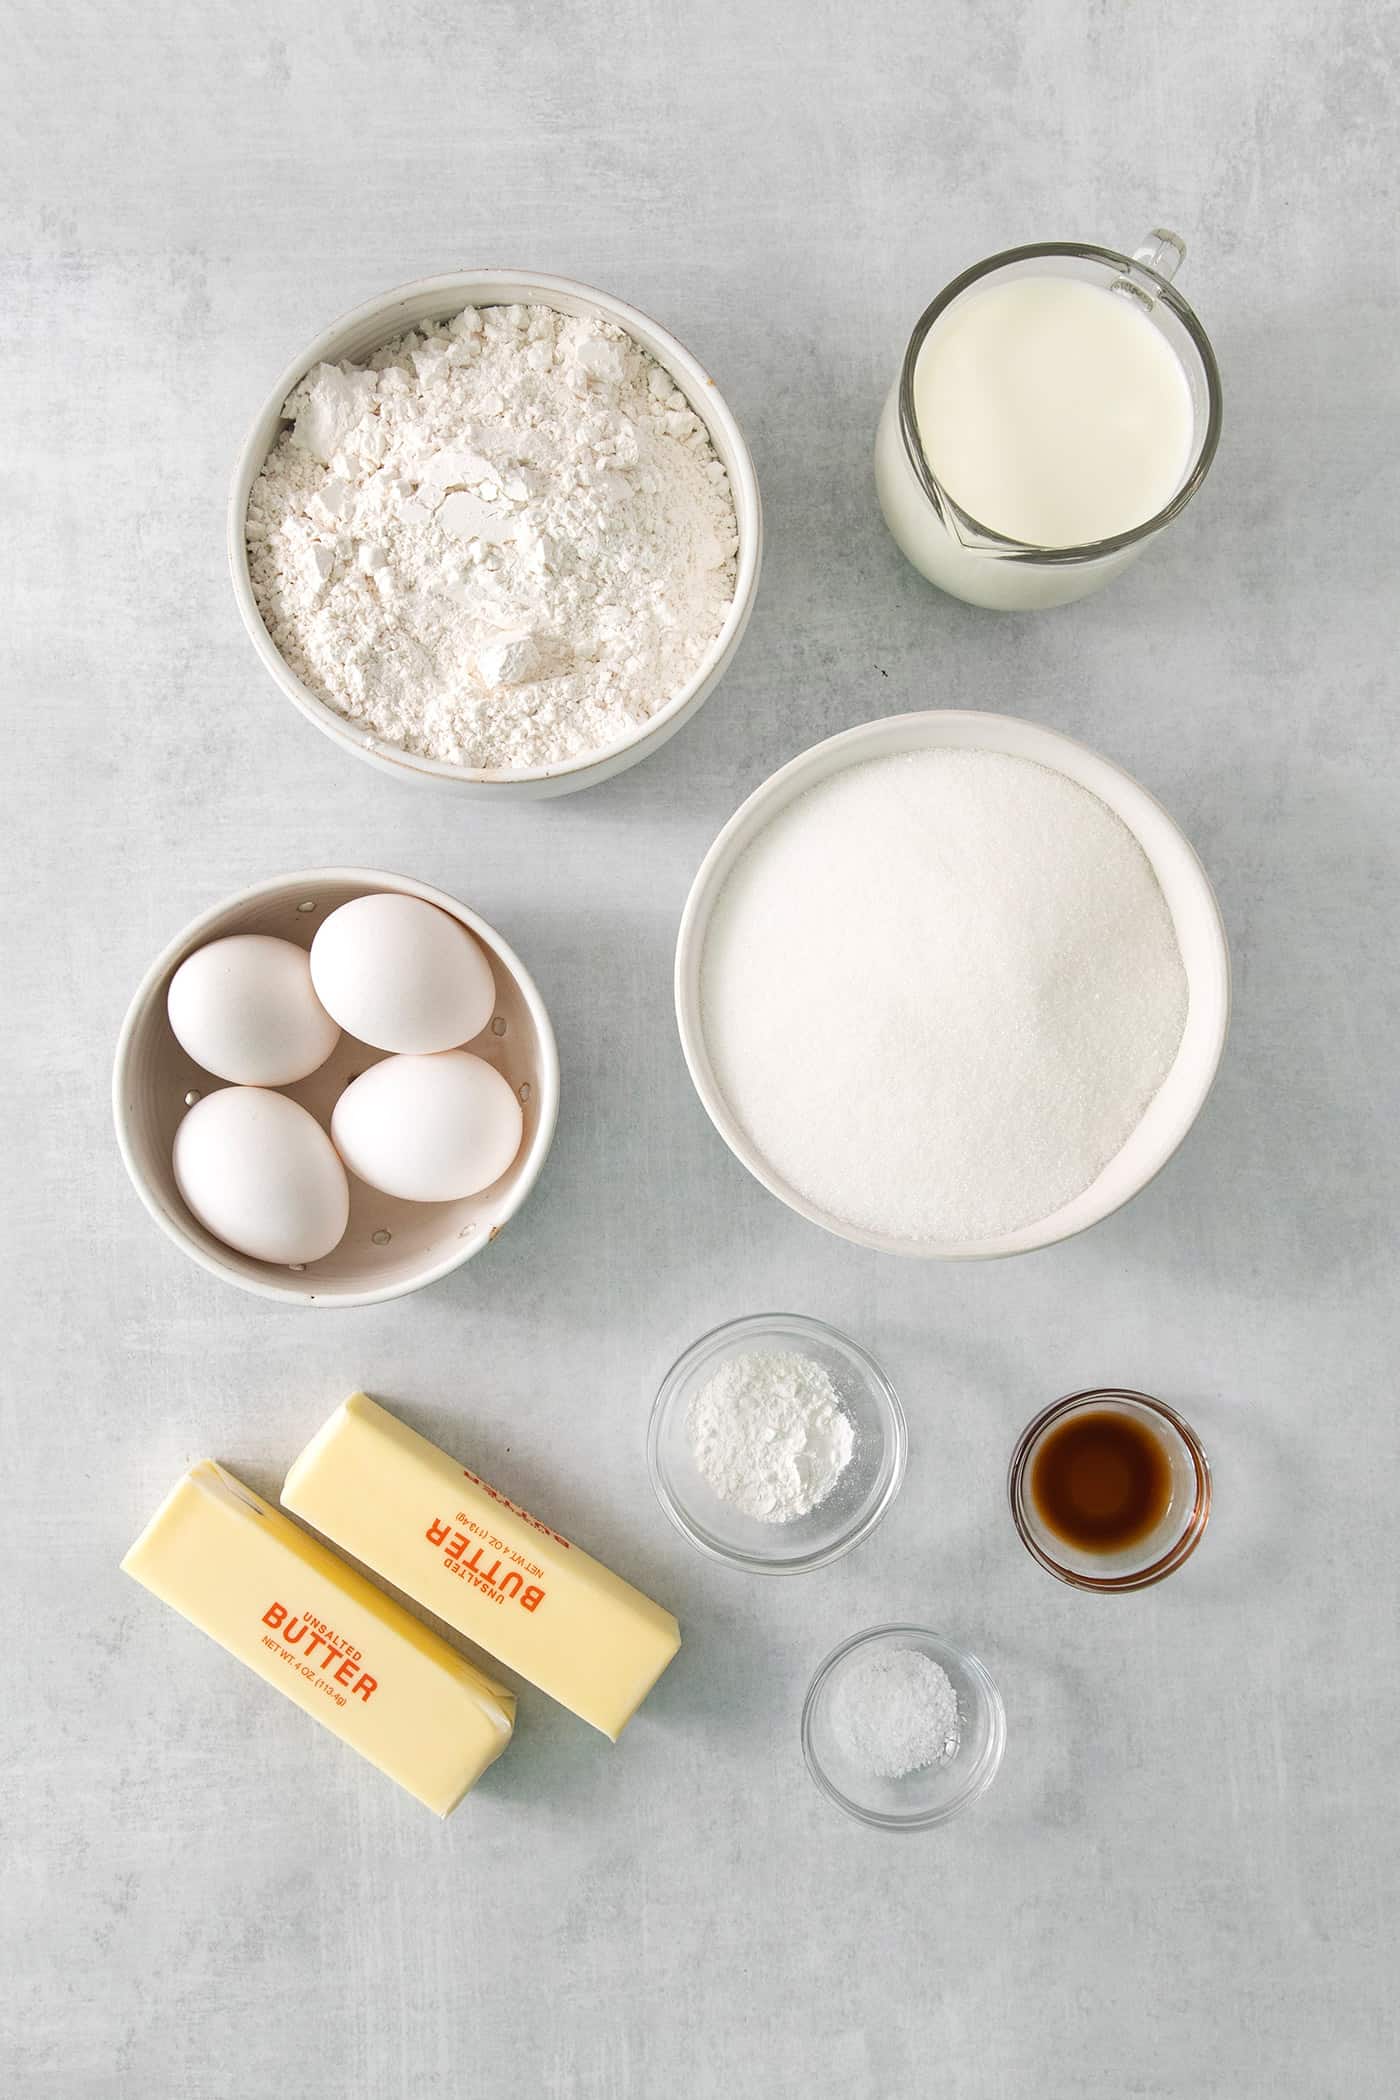 Ingredients for Chantilly cake: cake flour, baking powder, eggs, milk, vanilla, sugar, salt.